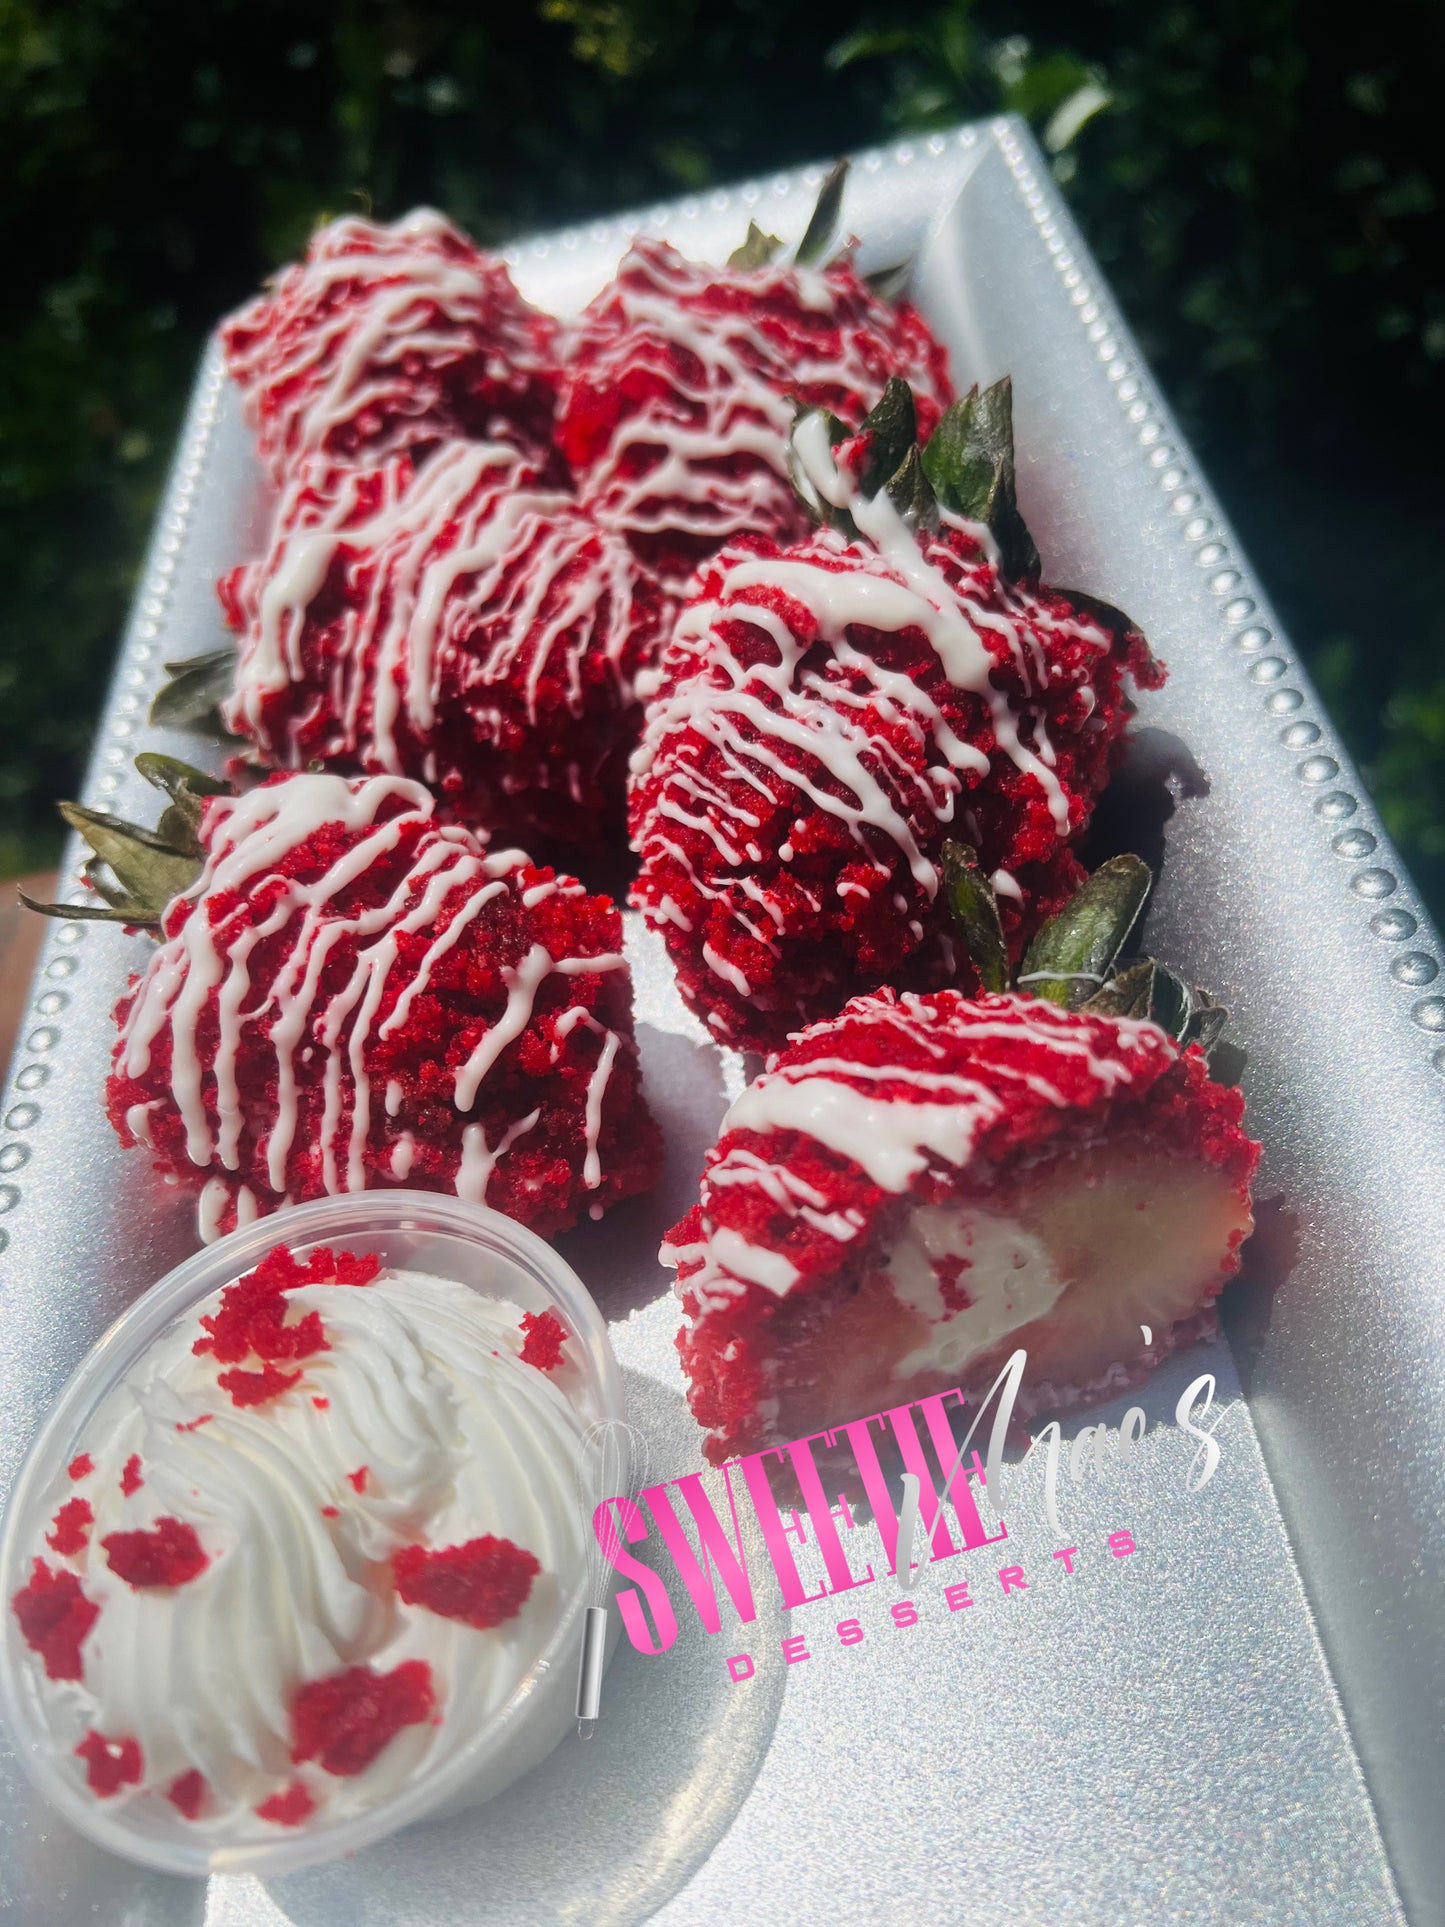 Red Velvet Cheesecake Stuffed Strawberries